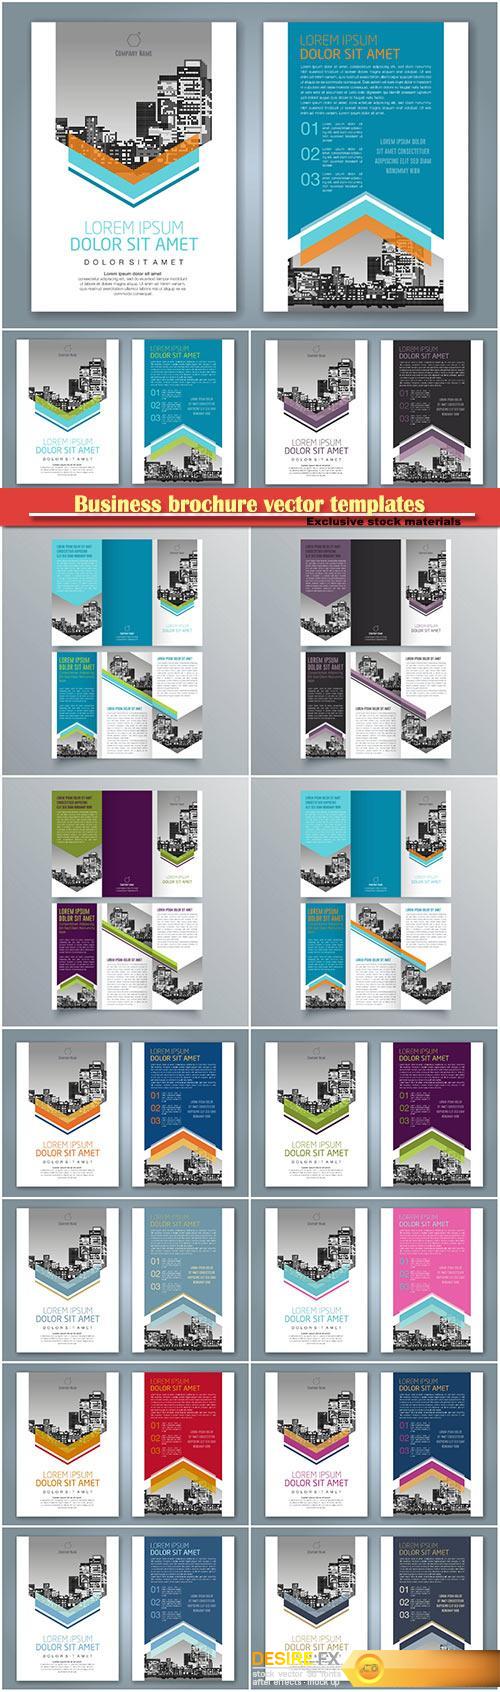 Business brochure vector templates, magazine cover, business mockup, education, presentation, report # 59